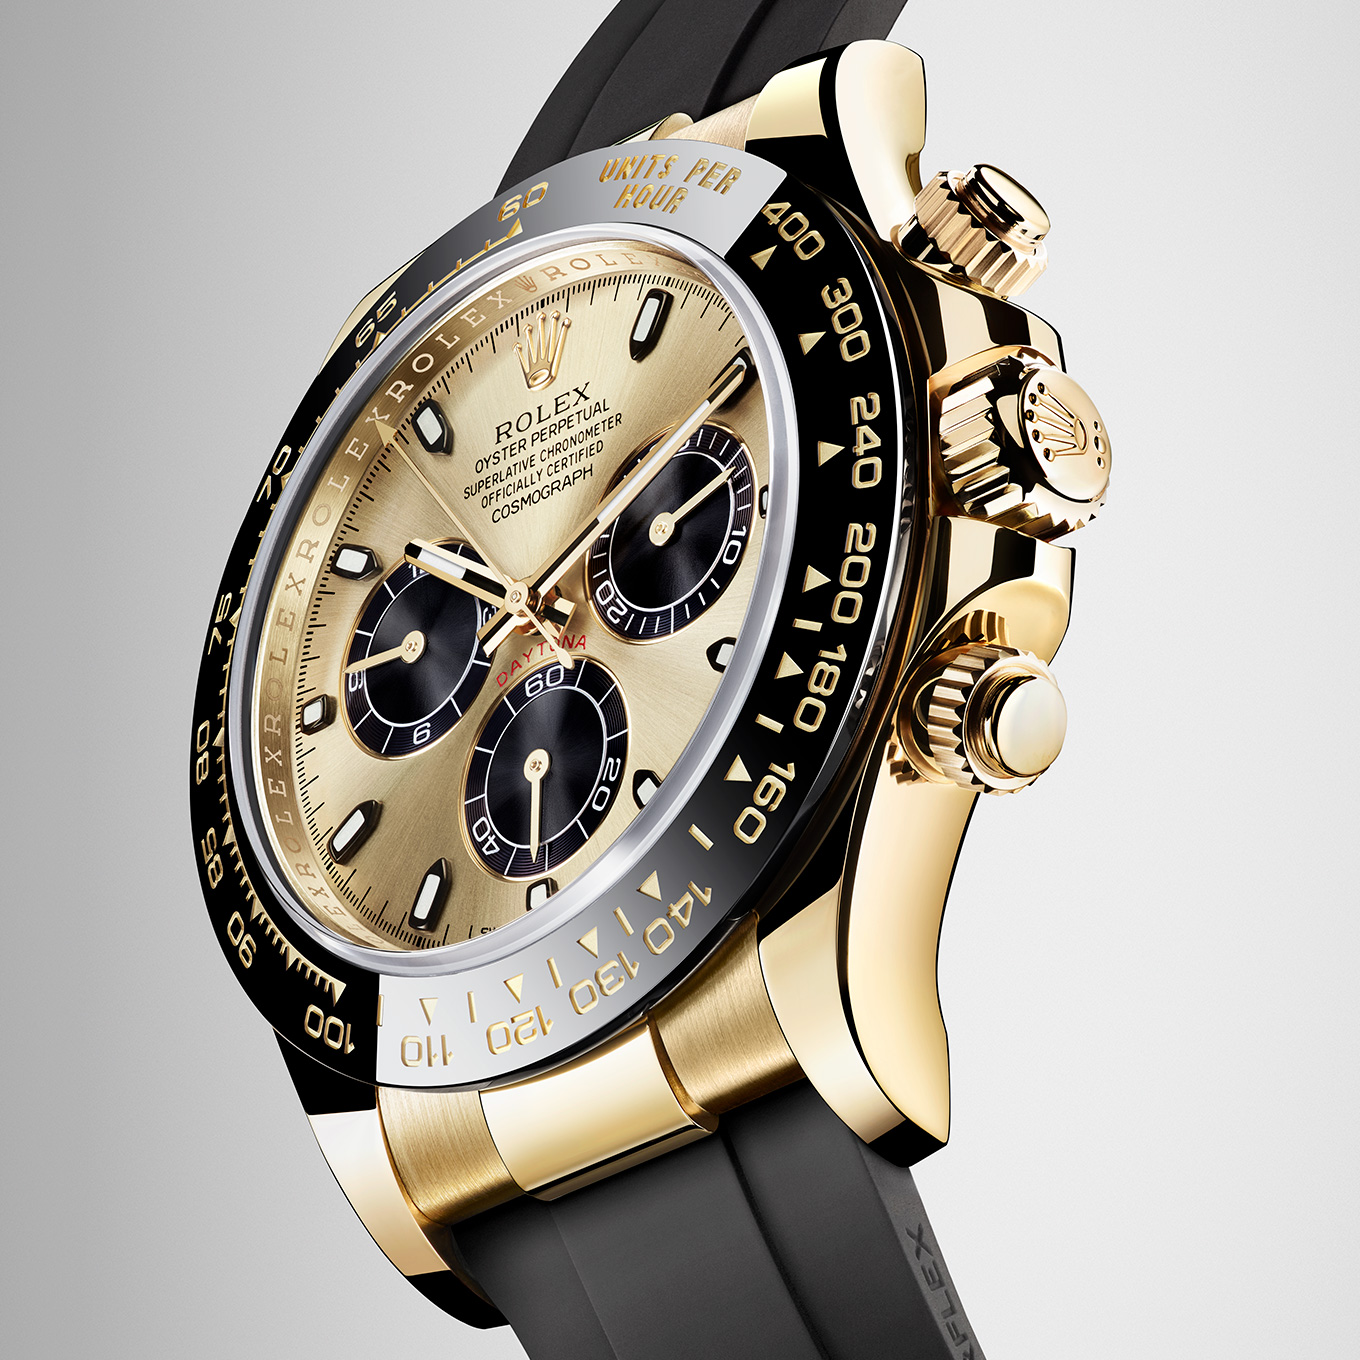 Rolex Explorer II 16570 Gmt Stainless Steel Black Dial Watch MINT